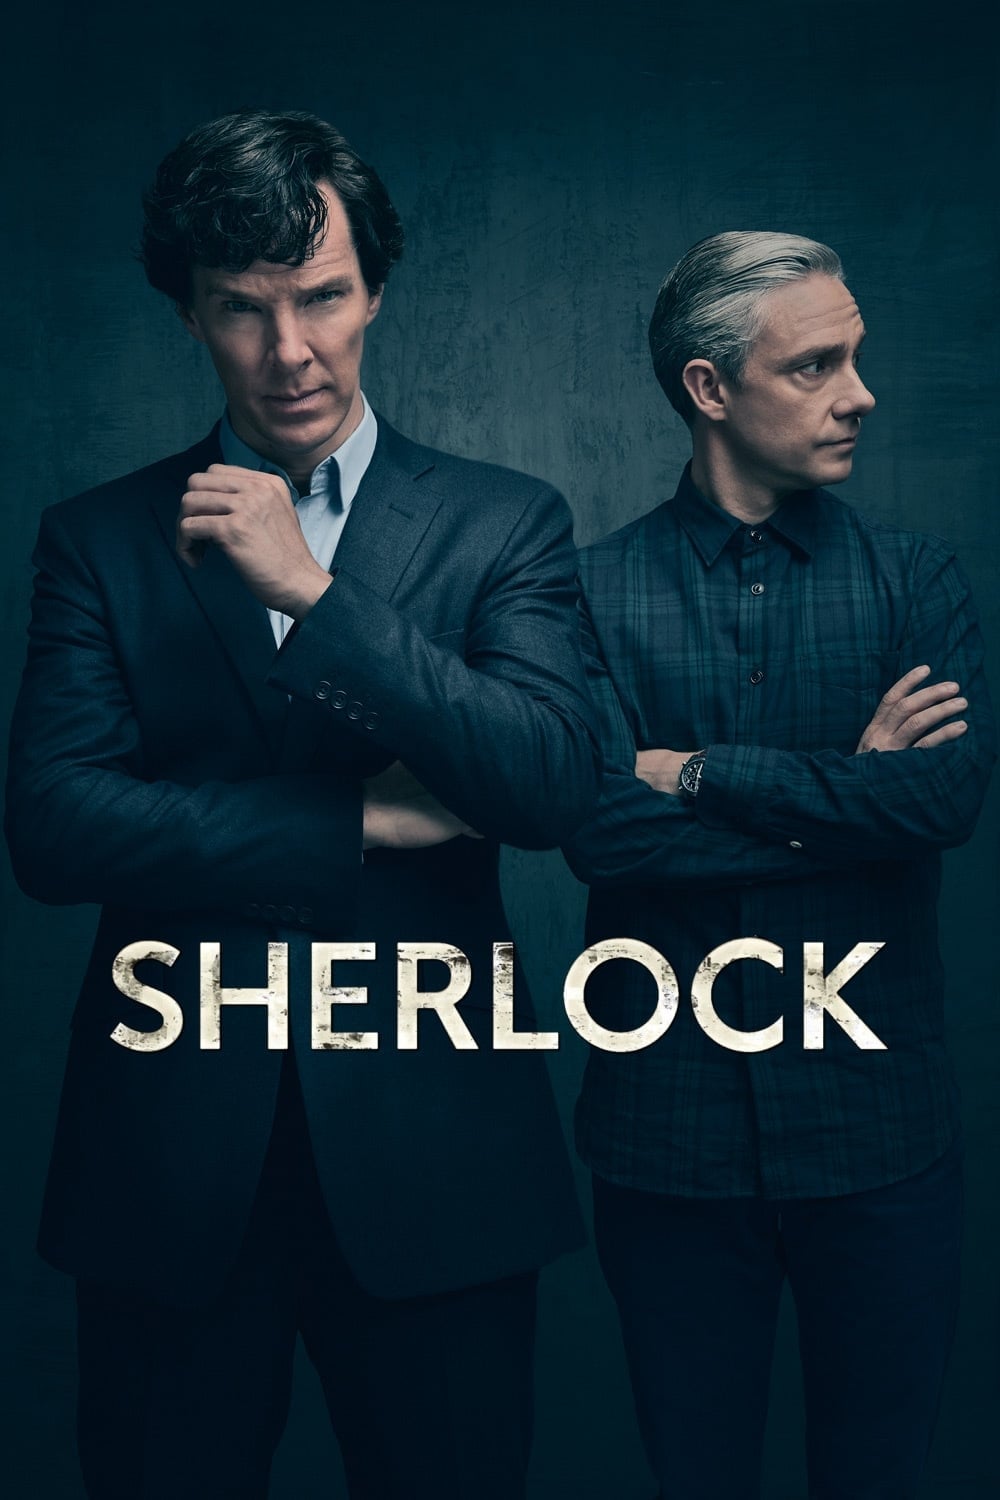 Plakát pro film “Sherlock”